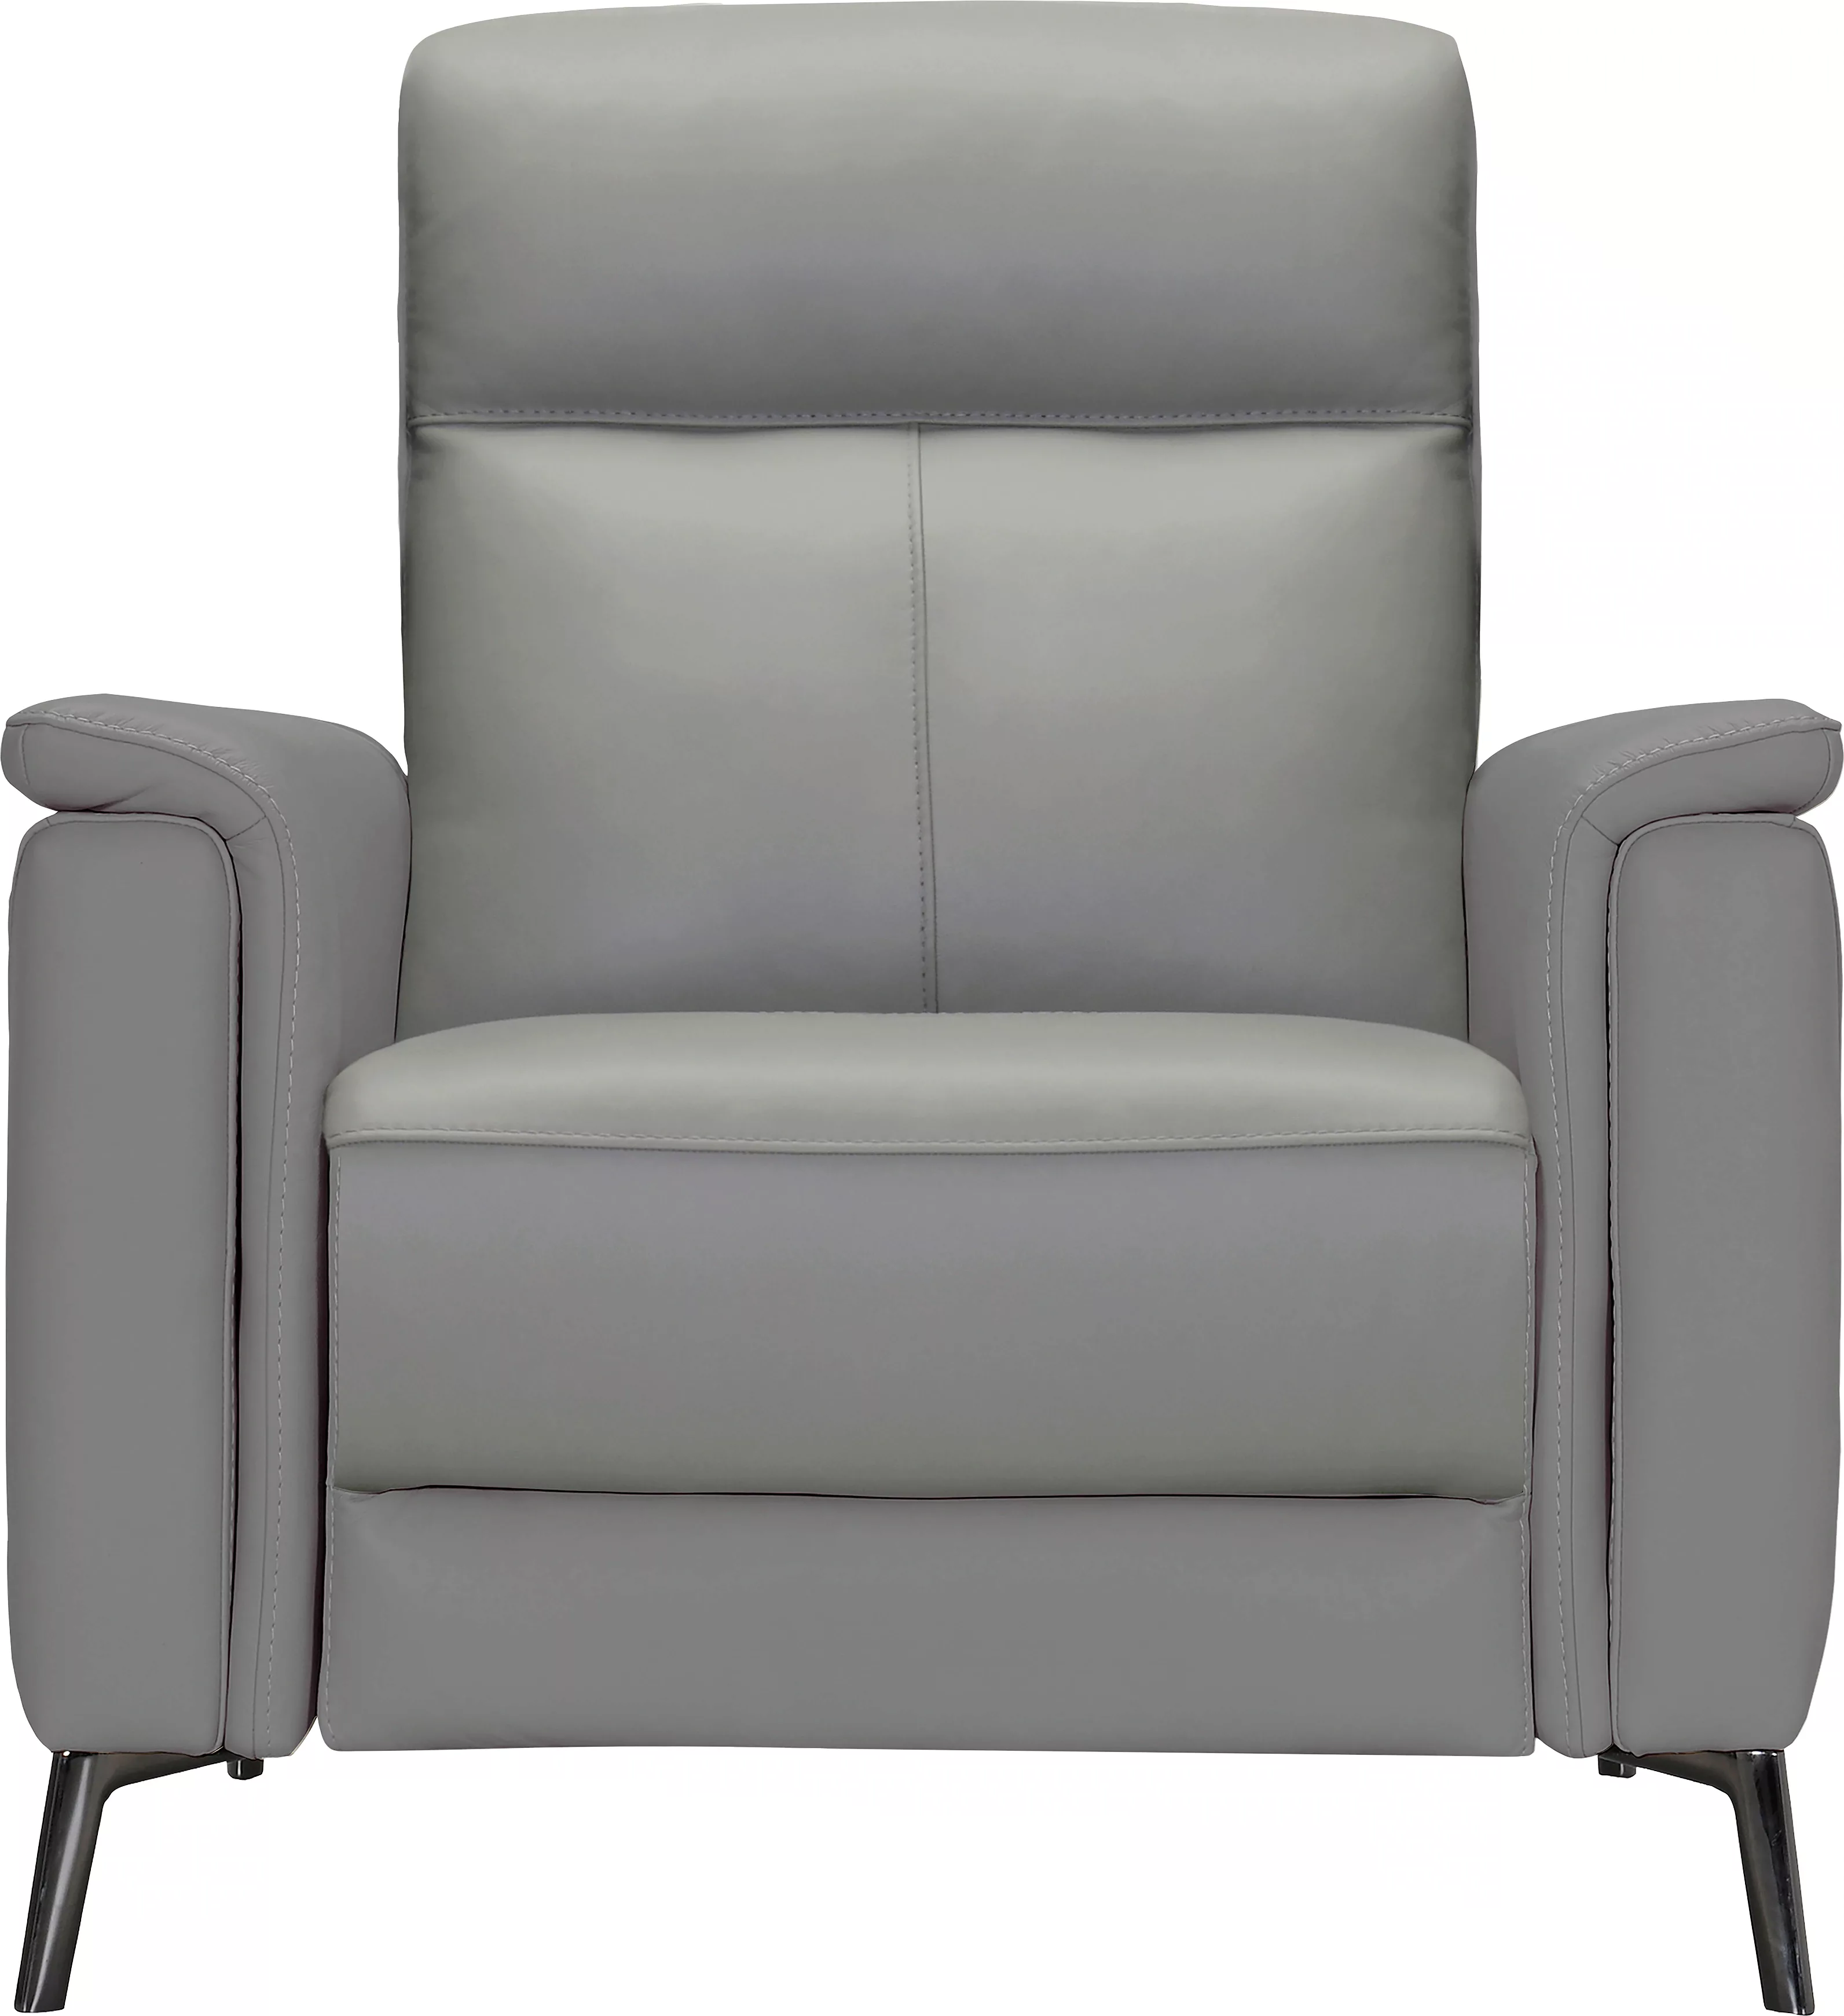 Places of Style Sessel "Barano" günstig online kaufen